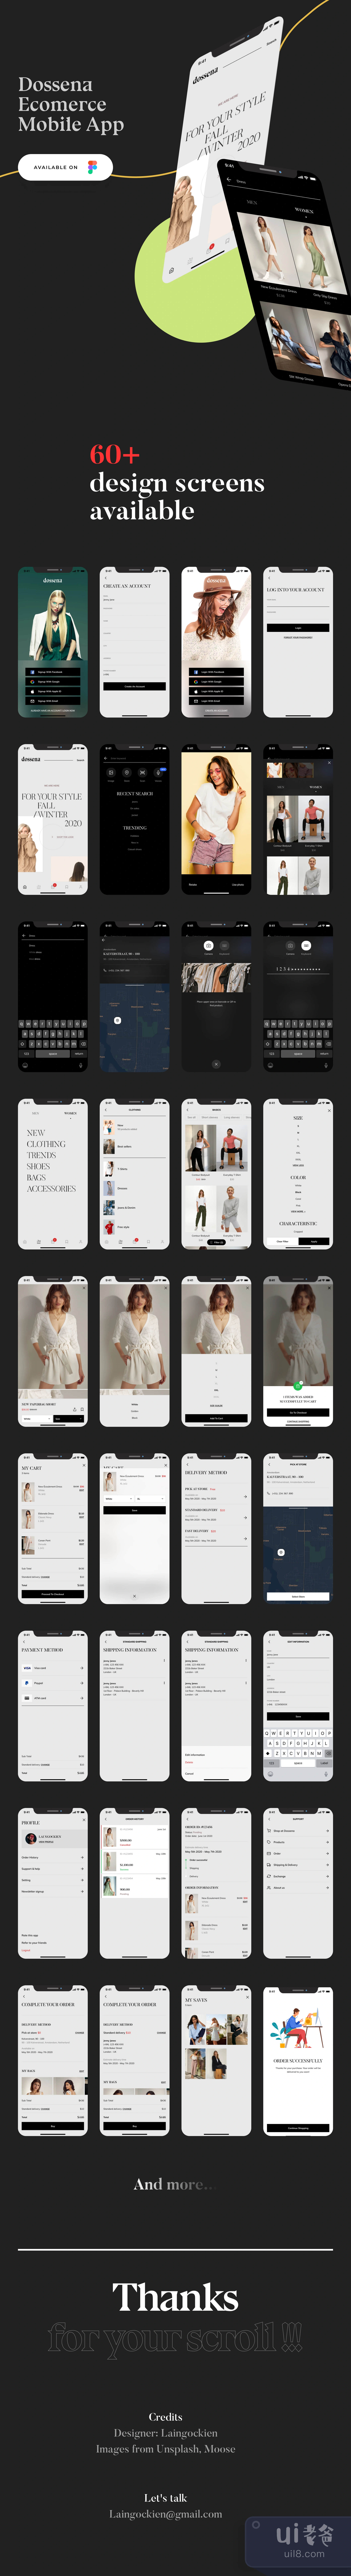 Dossena - 时尚服装购物App设计插图